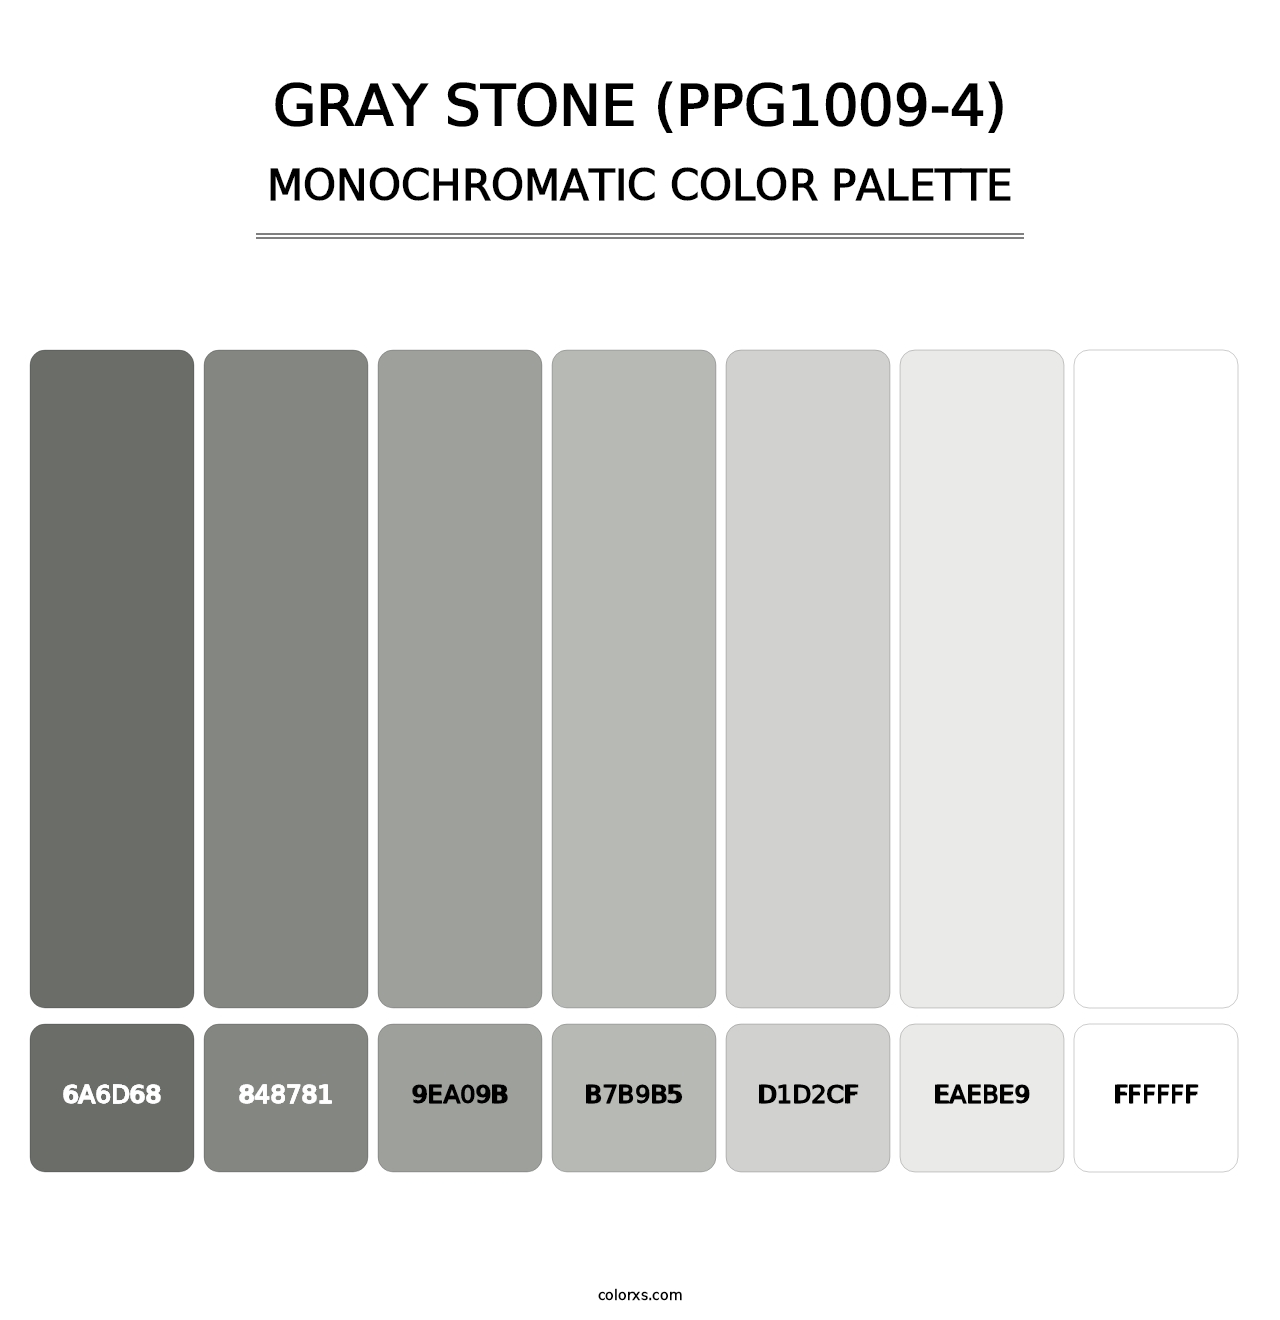 Gray Stone (PPG1009-4) - Monochromatic Color Palette